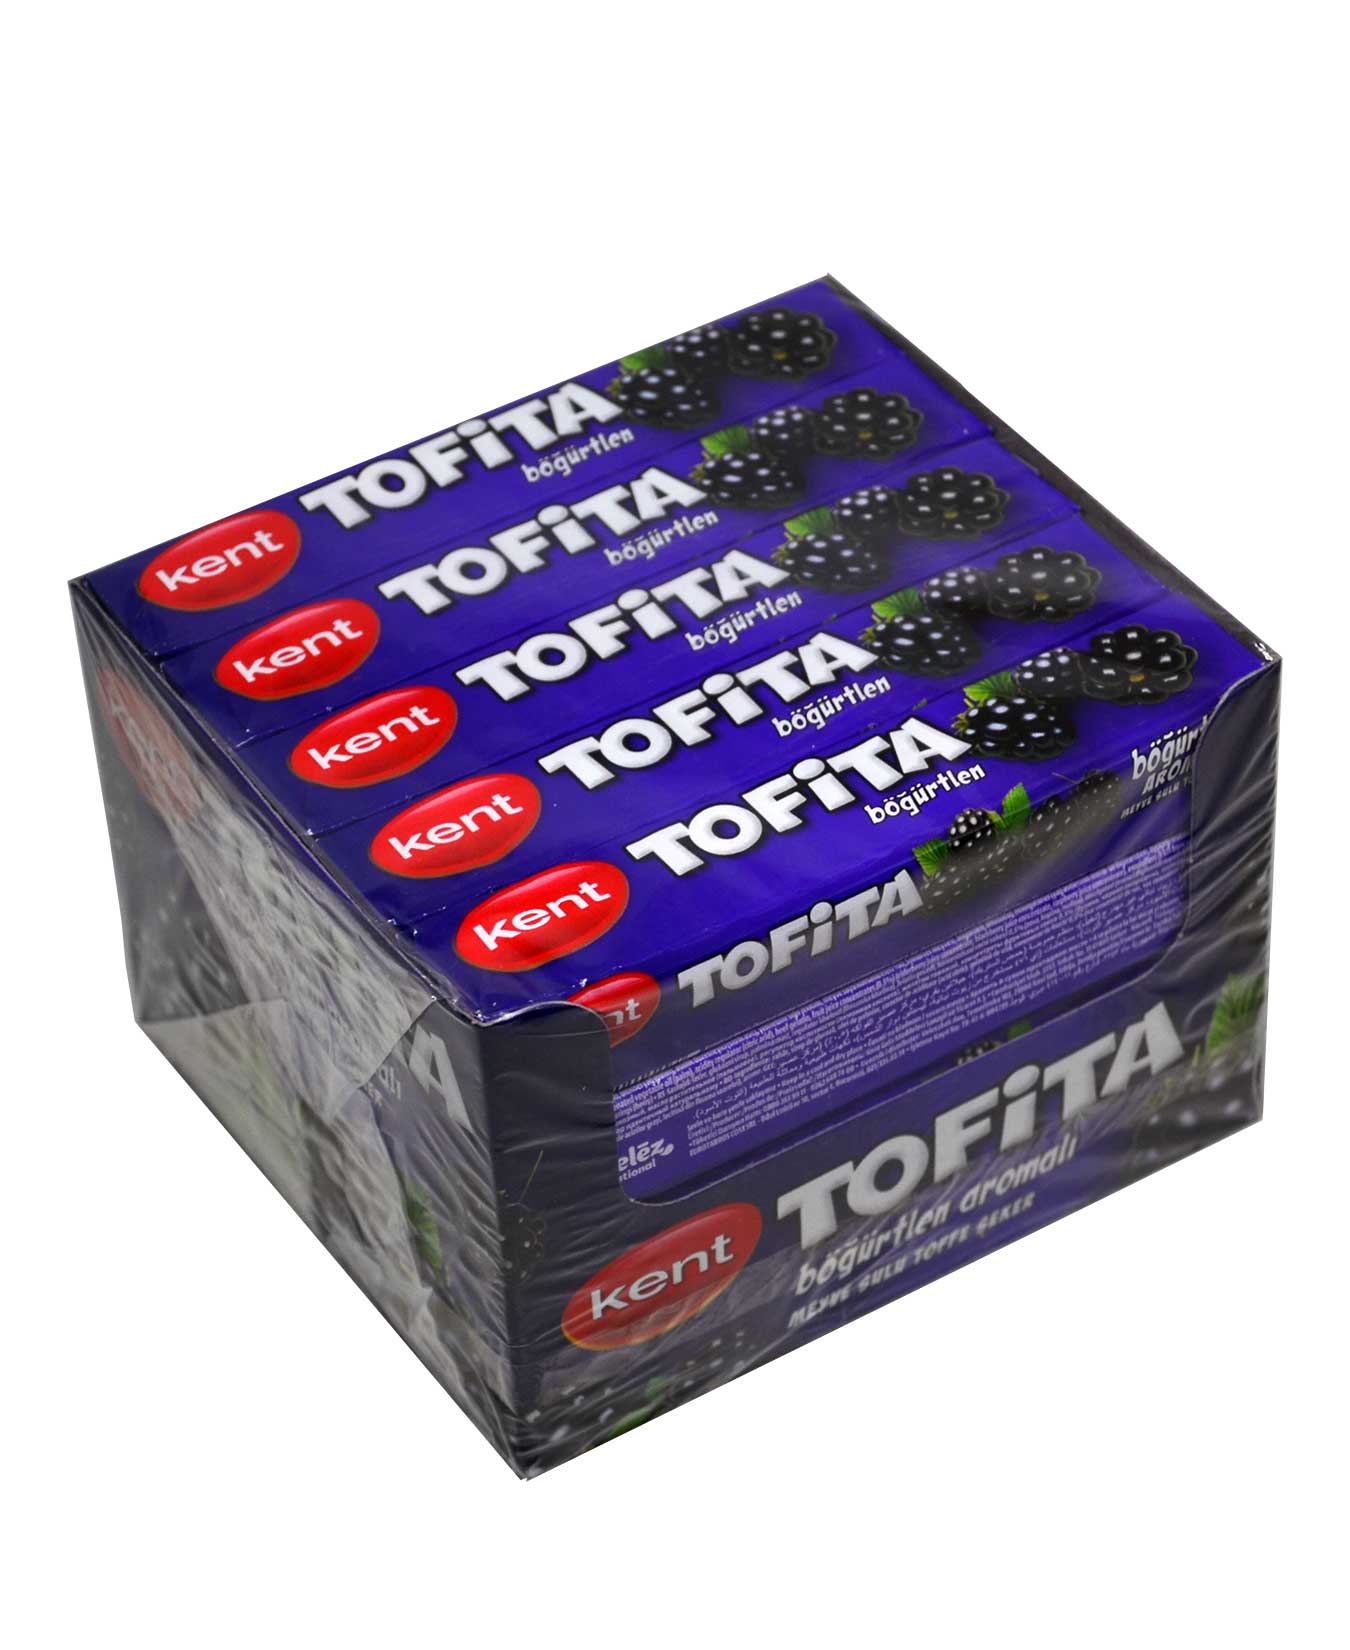 Tofita Şeker 20'li Paket Böğürtlen Aromalı Meyve Sulu Toffe